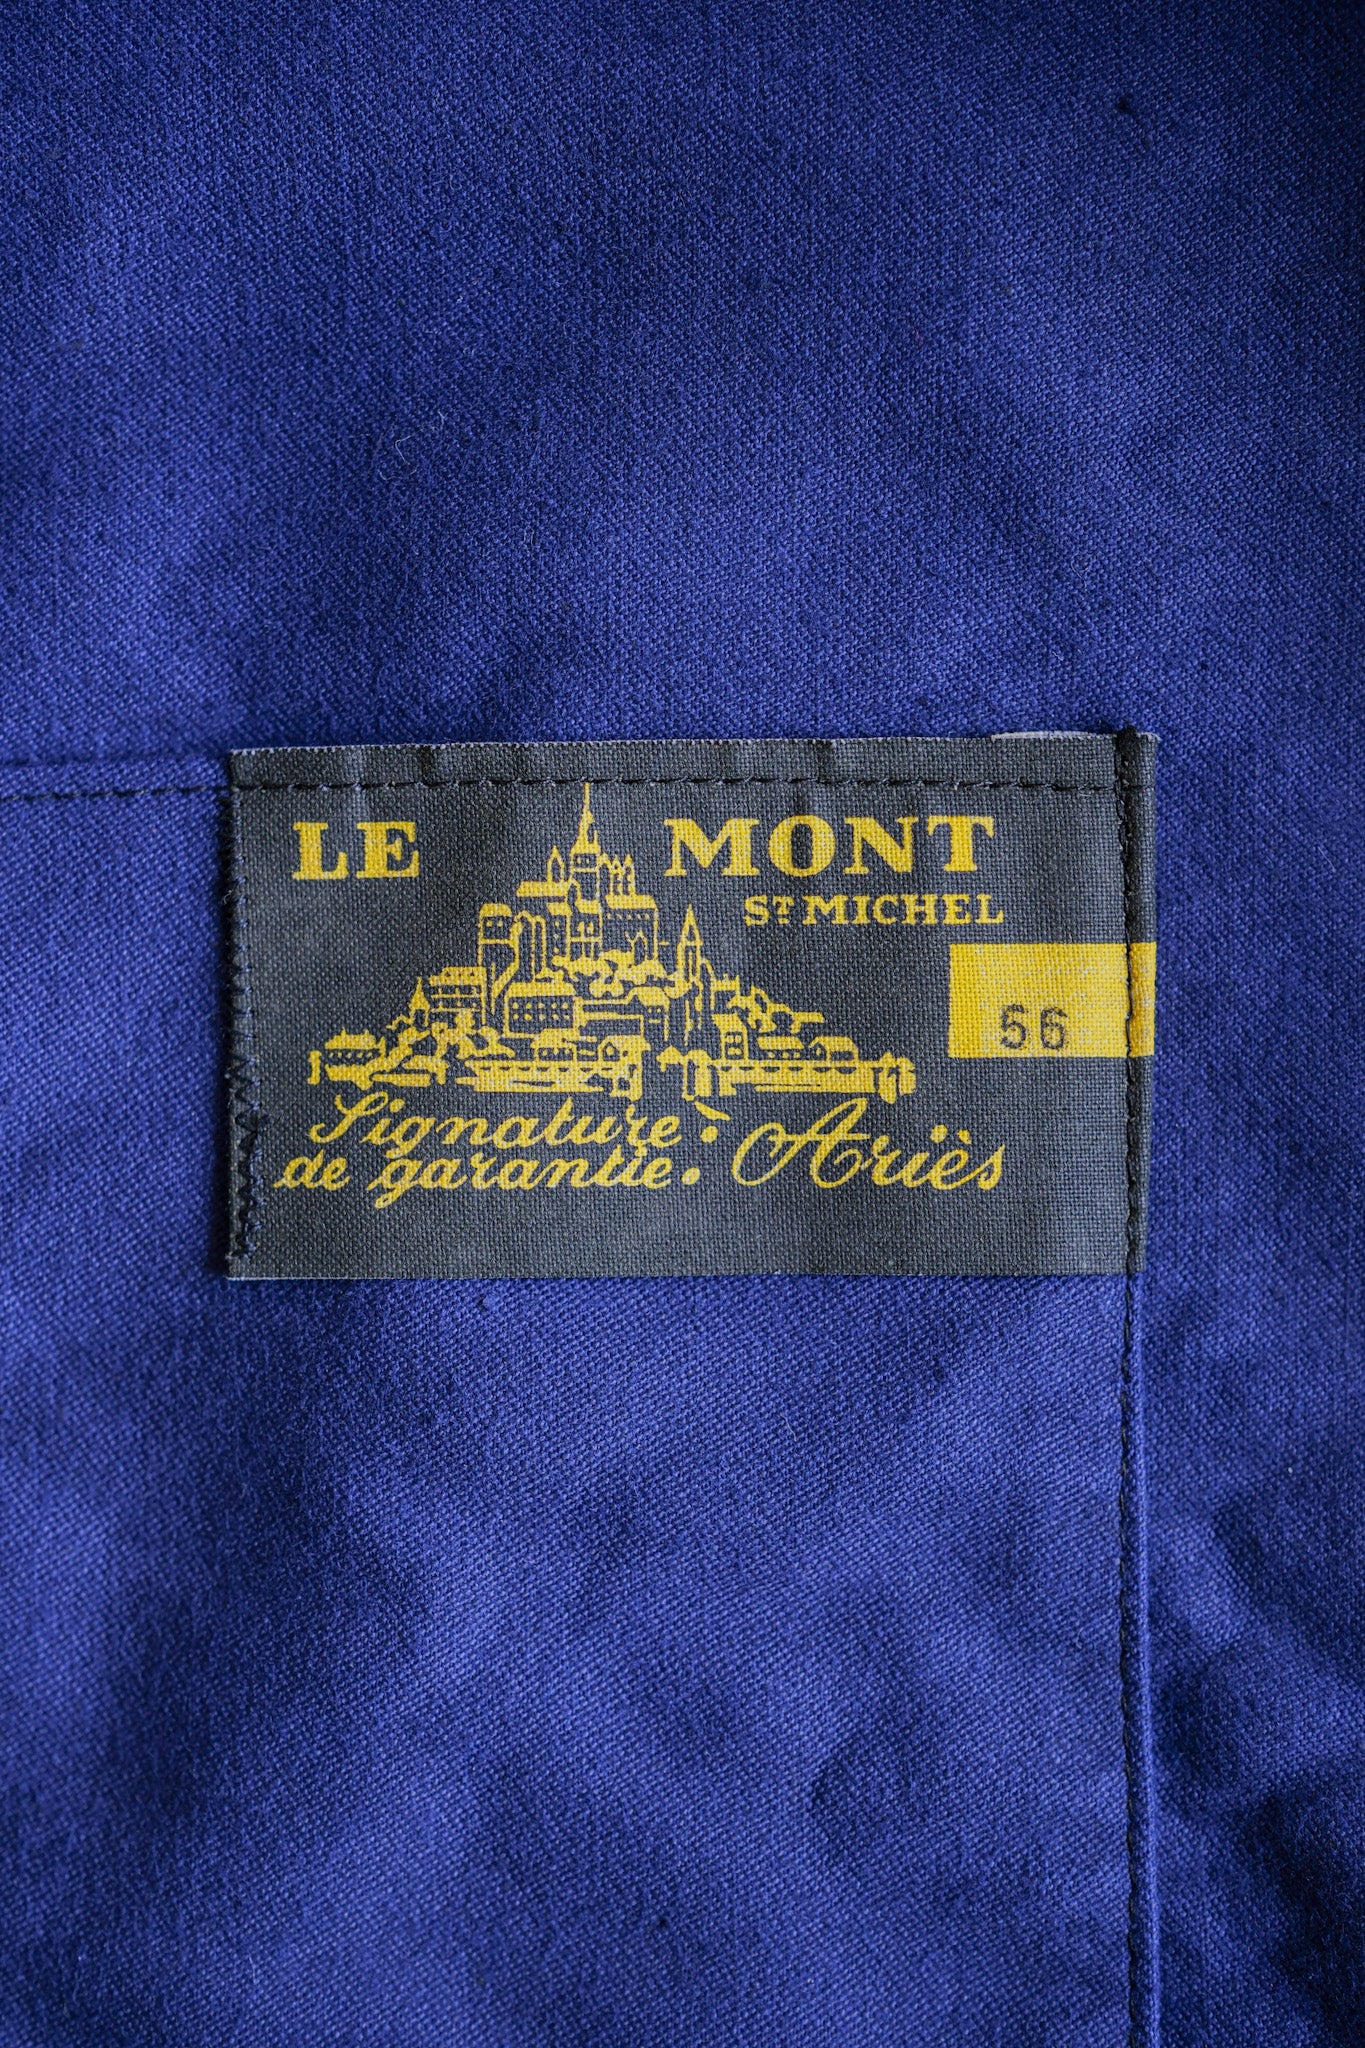 [~ 50's] แจ็คเก็ตงานโมลคินสีน้ำเงินวินเทจฝรั่งเศสขนาด 56 "Le Mont St. Michel" "Dead Stock"